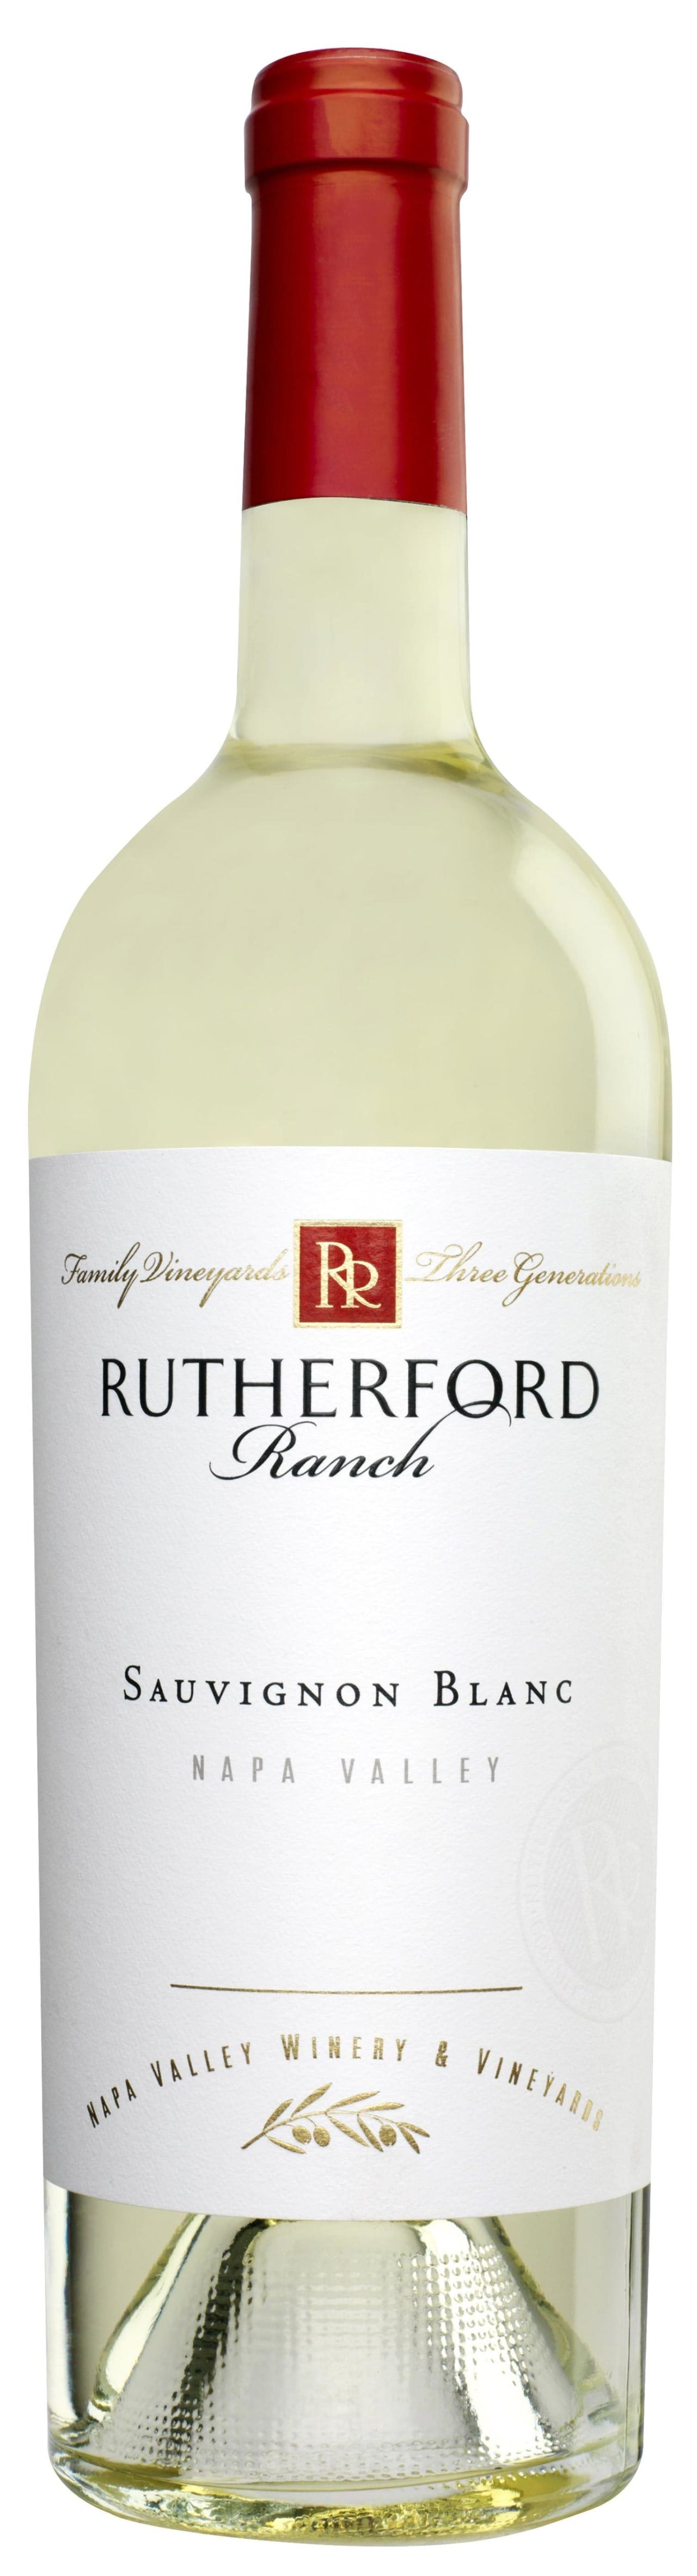 Rutherford Sauvignon Blanc 2019